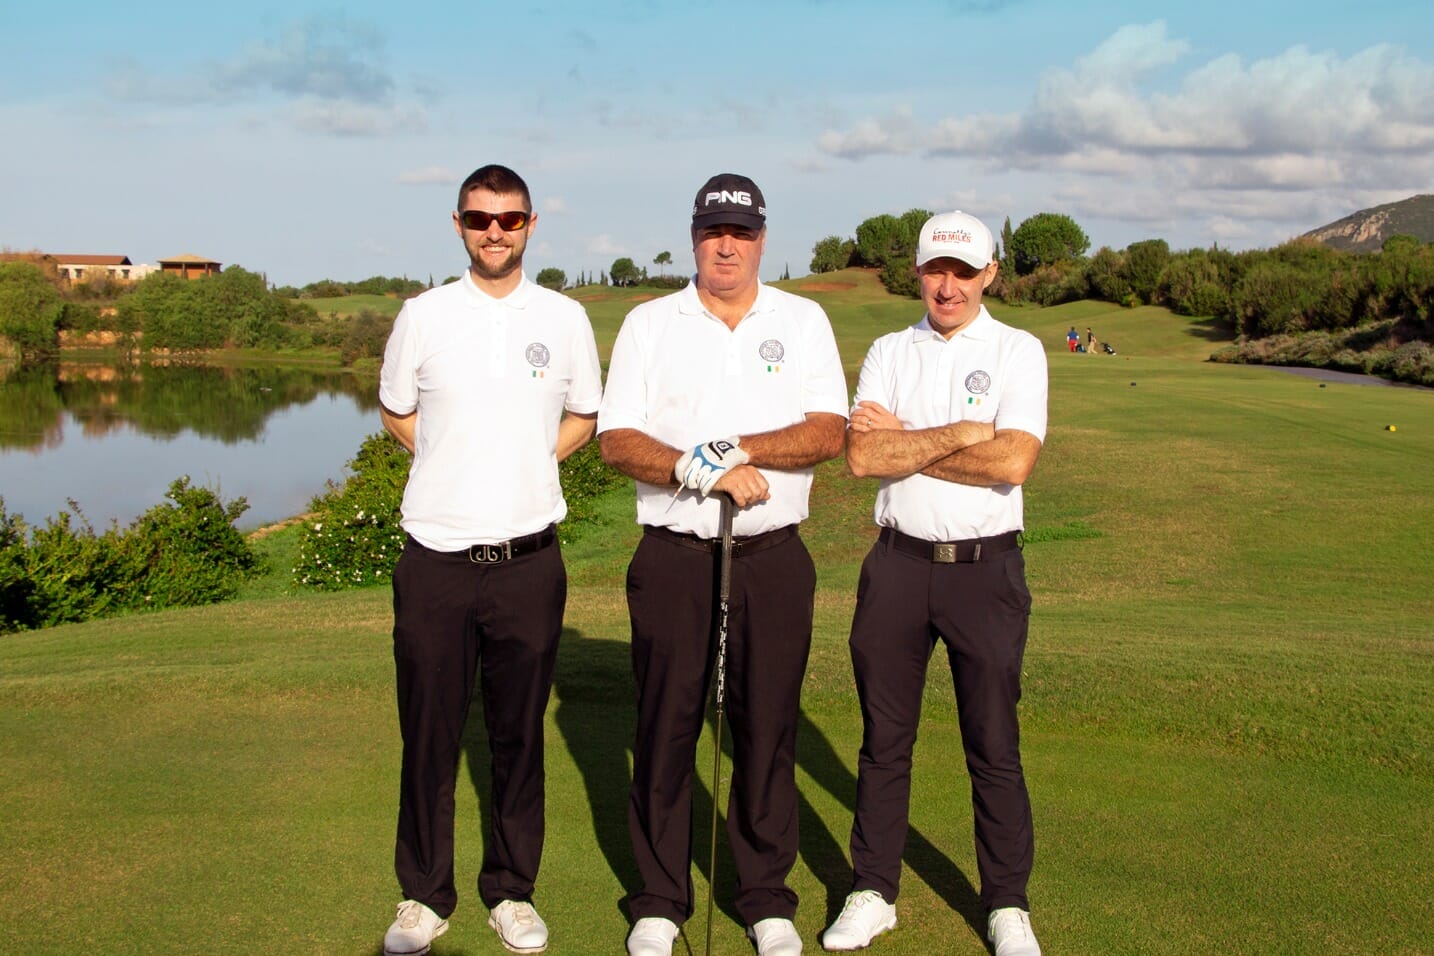 Irish trio ready to defend International Team Championship